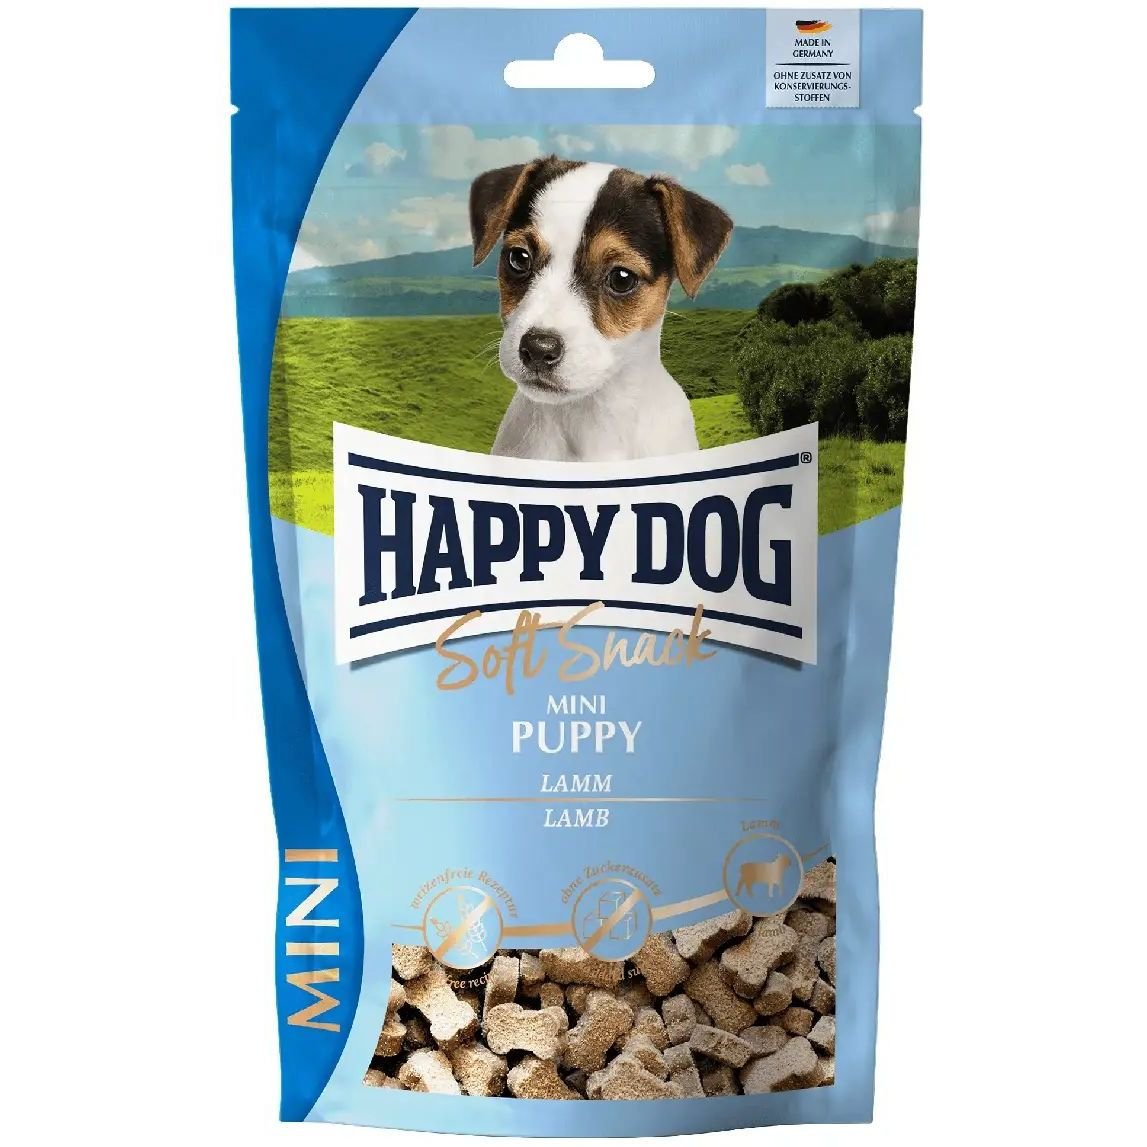 Лакомство для собак Happy Dog Happy Dog Soft Snack Mini Puppy мягкие со вкусом ягненка и риса, 100 г - фото 1